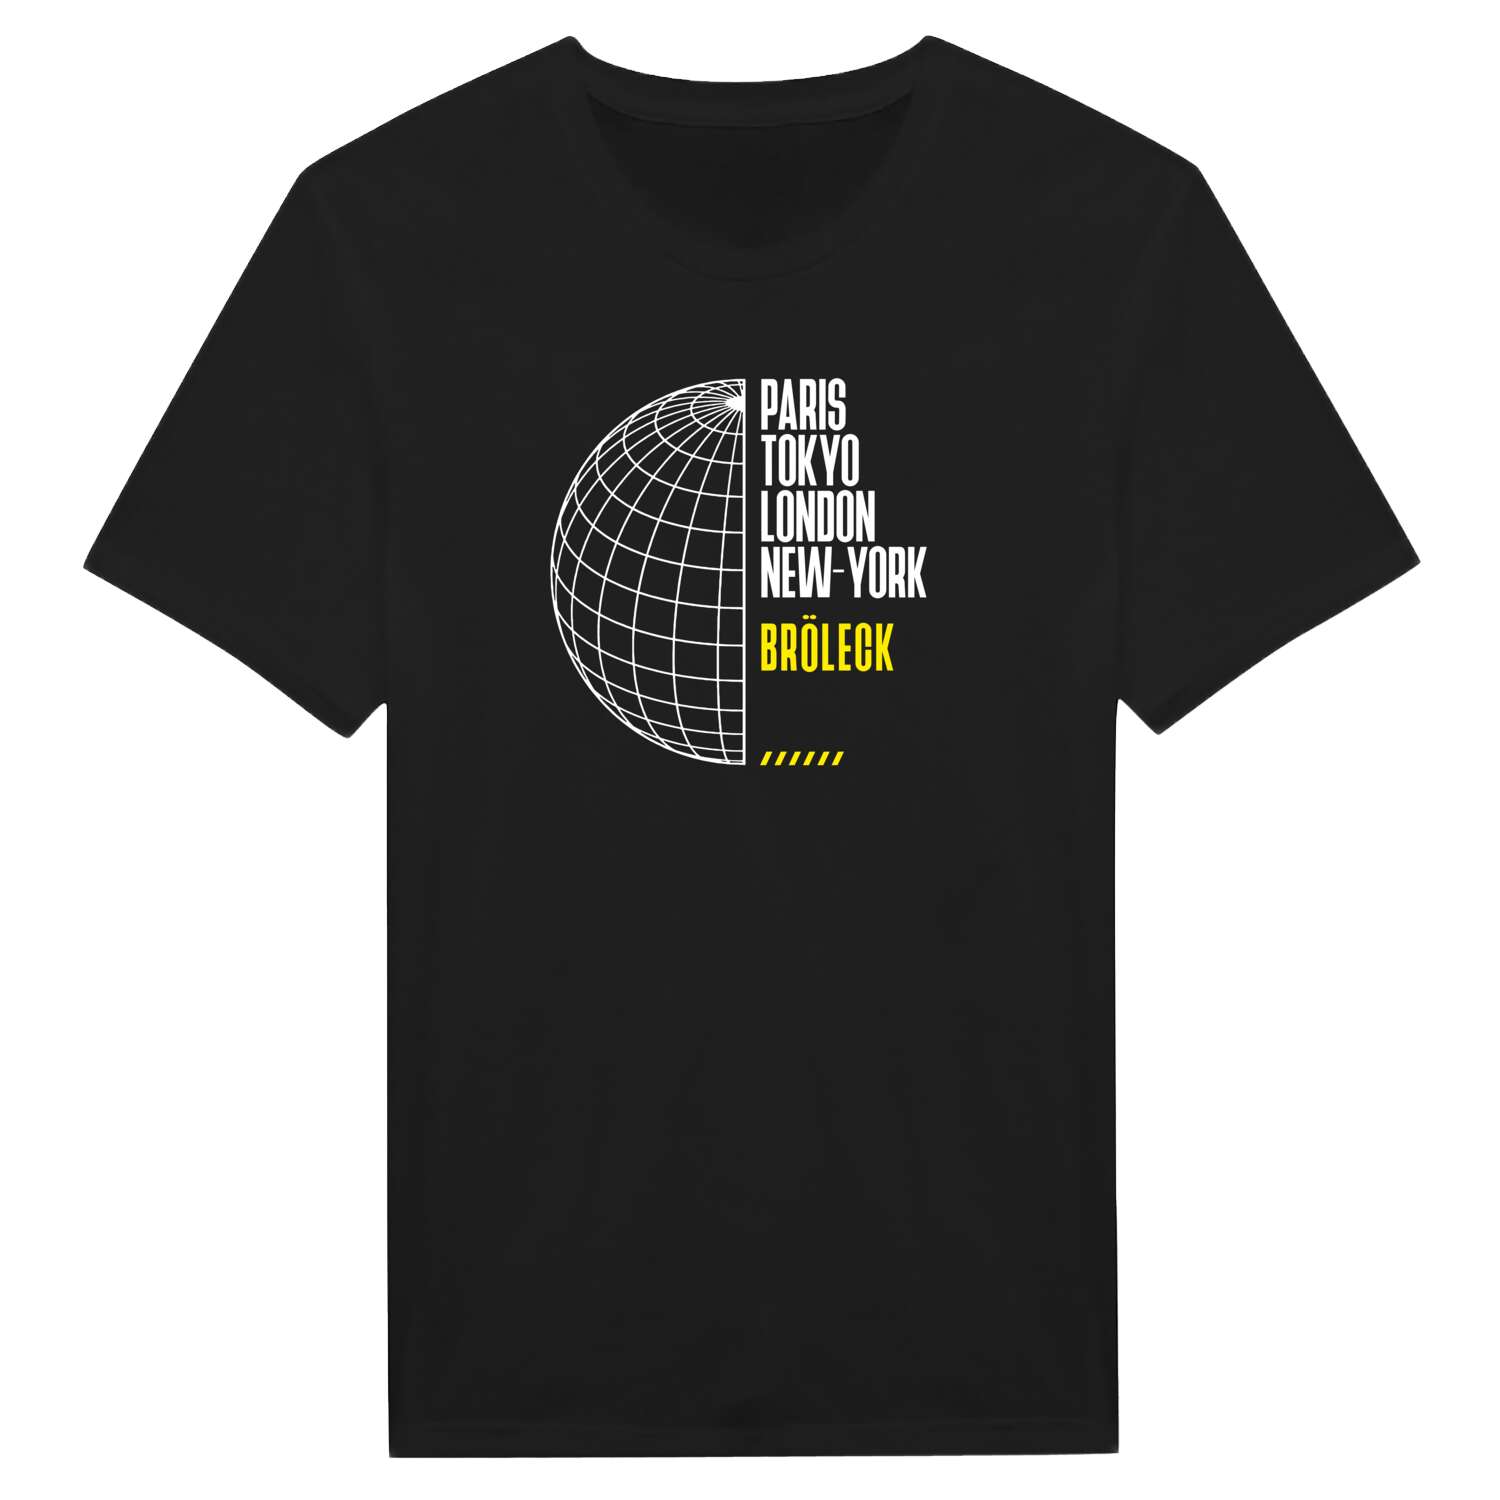 Bröleck T-Shirt »Paris Tokyo London«